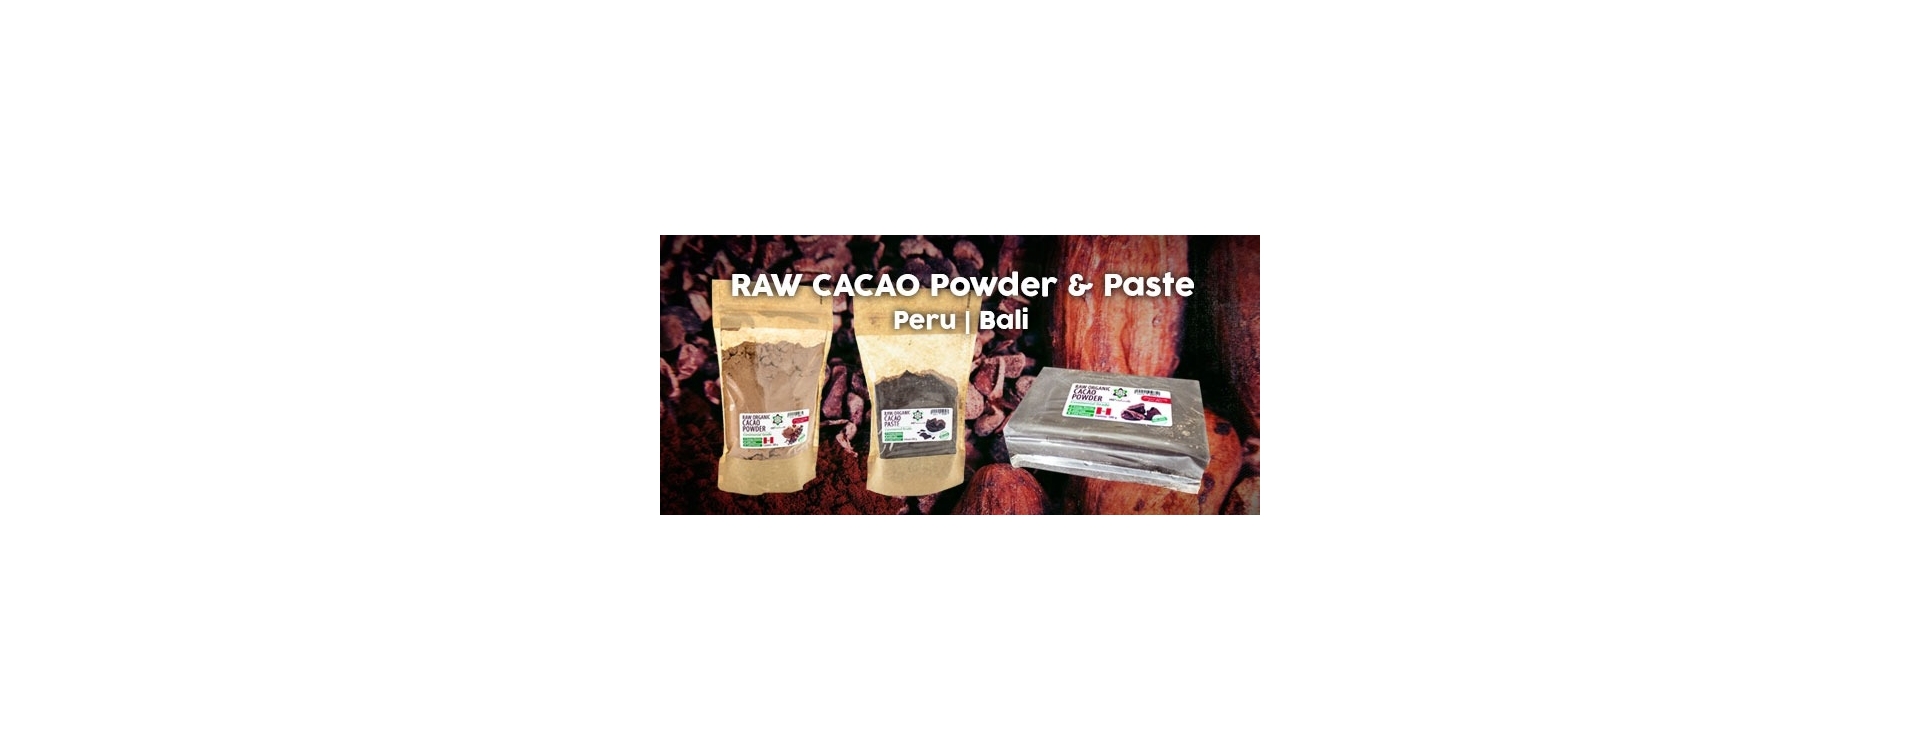 NEW: Ceremonial Raw Cacao Powder & Paste